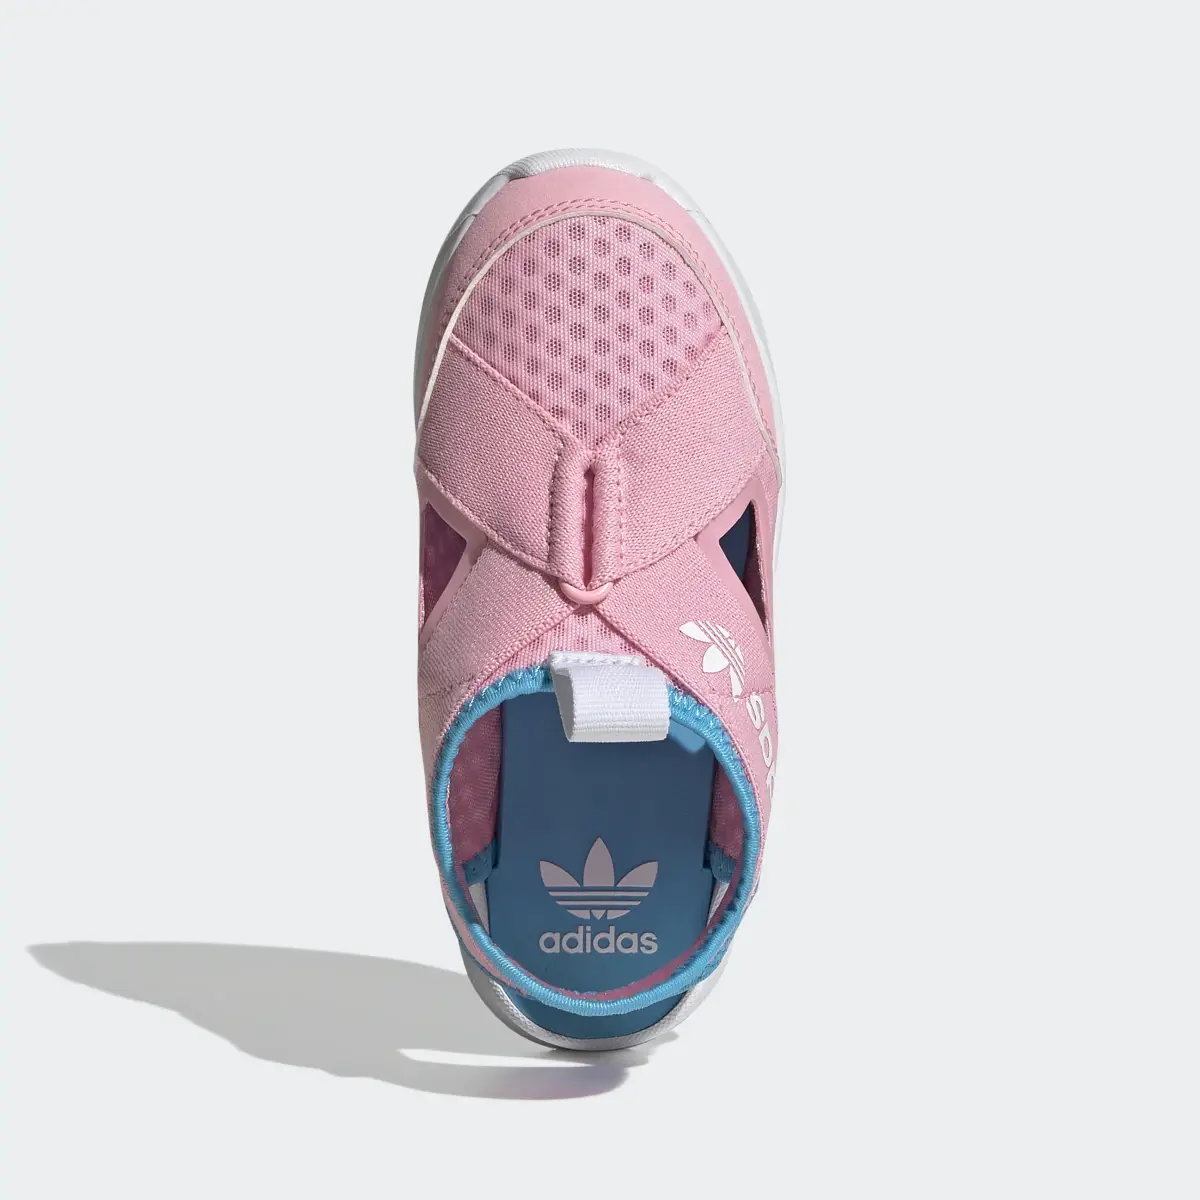 Adidas 360 Sandals. 3